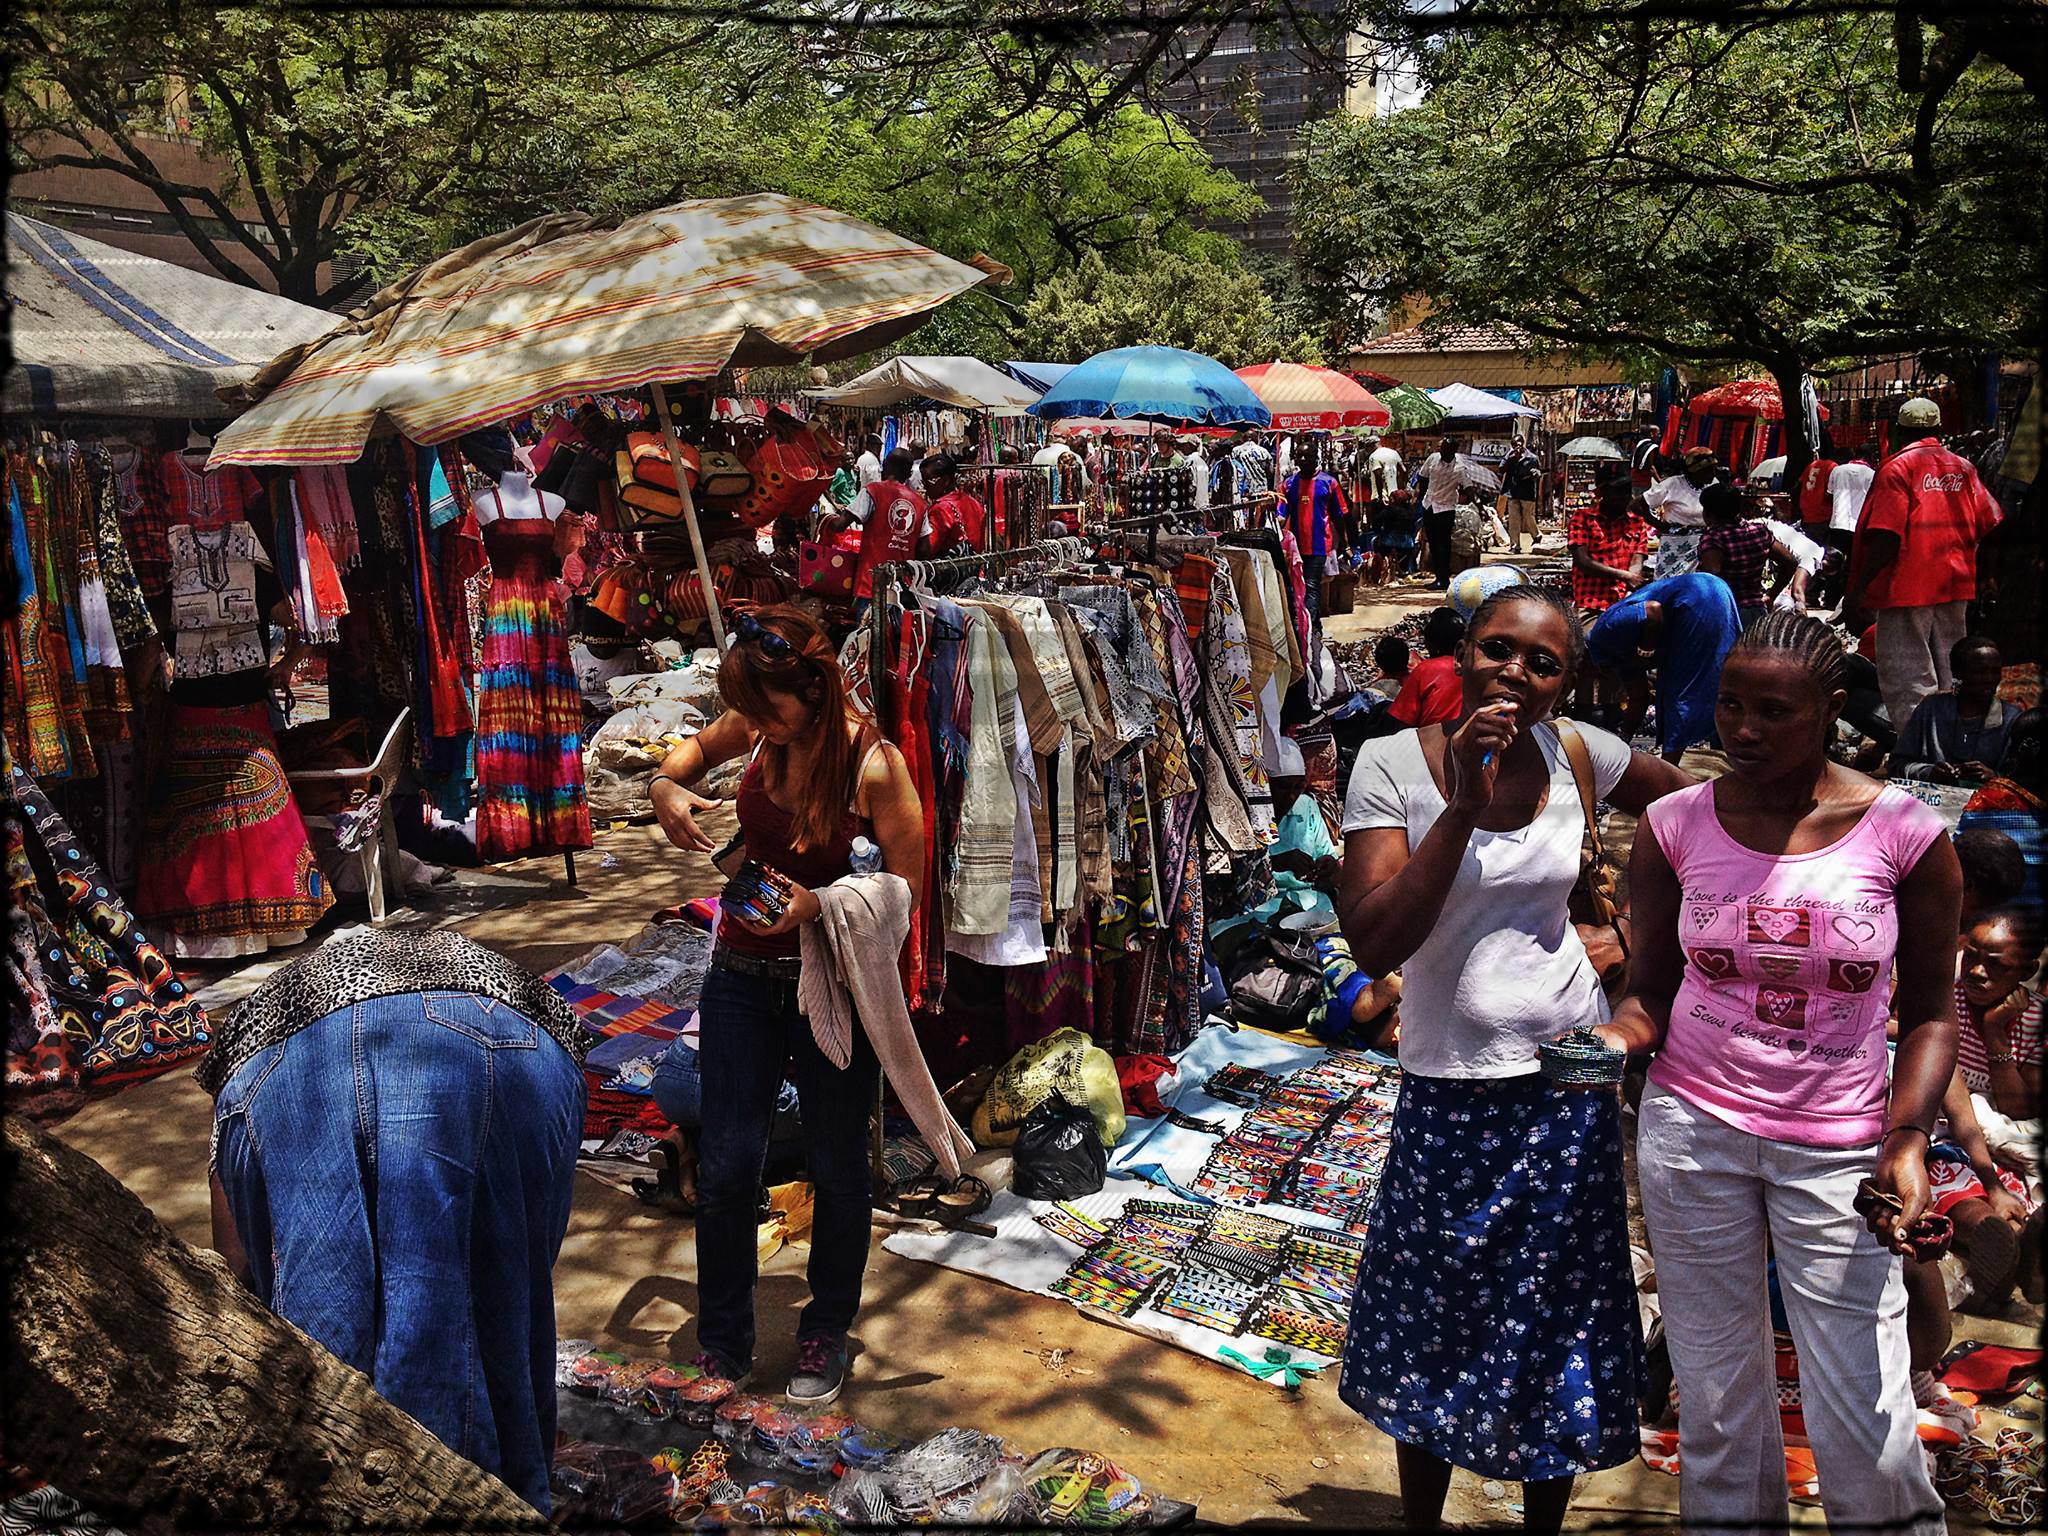 Where is Nairobi's Maasai Market?, Nairobi's Maasai Market